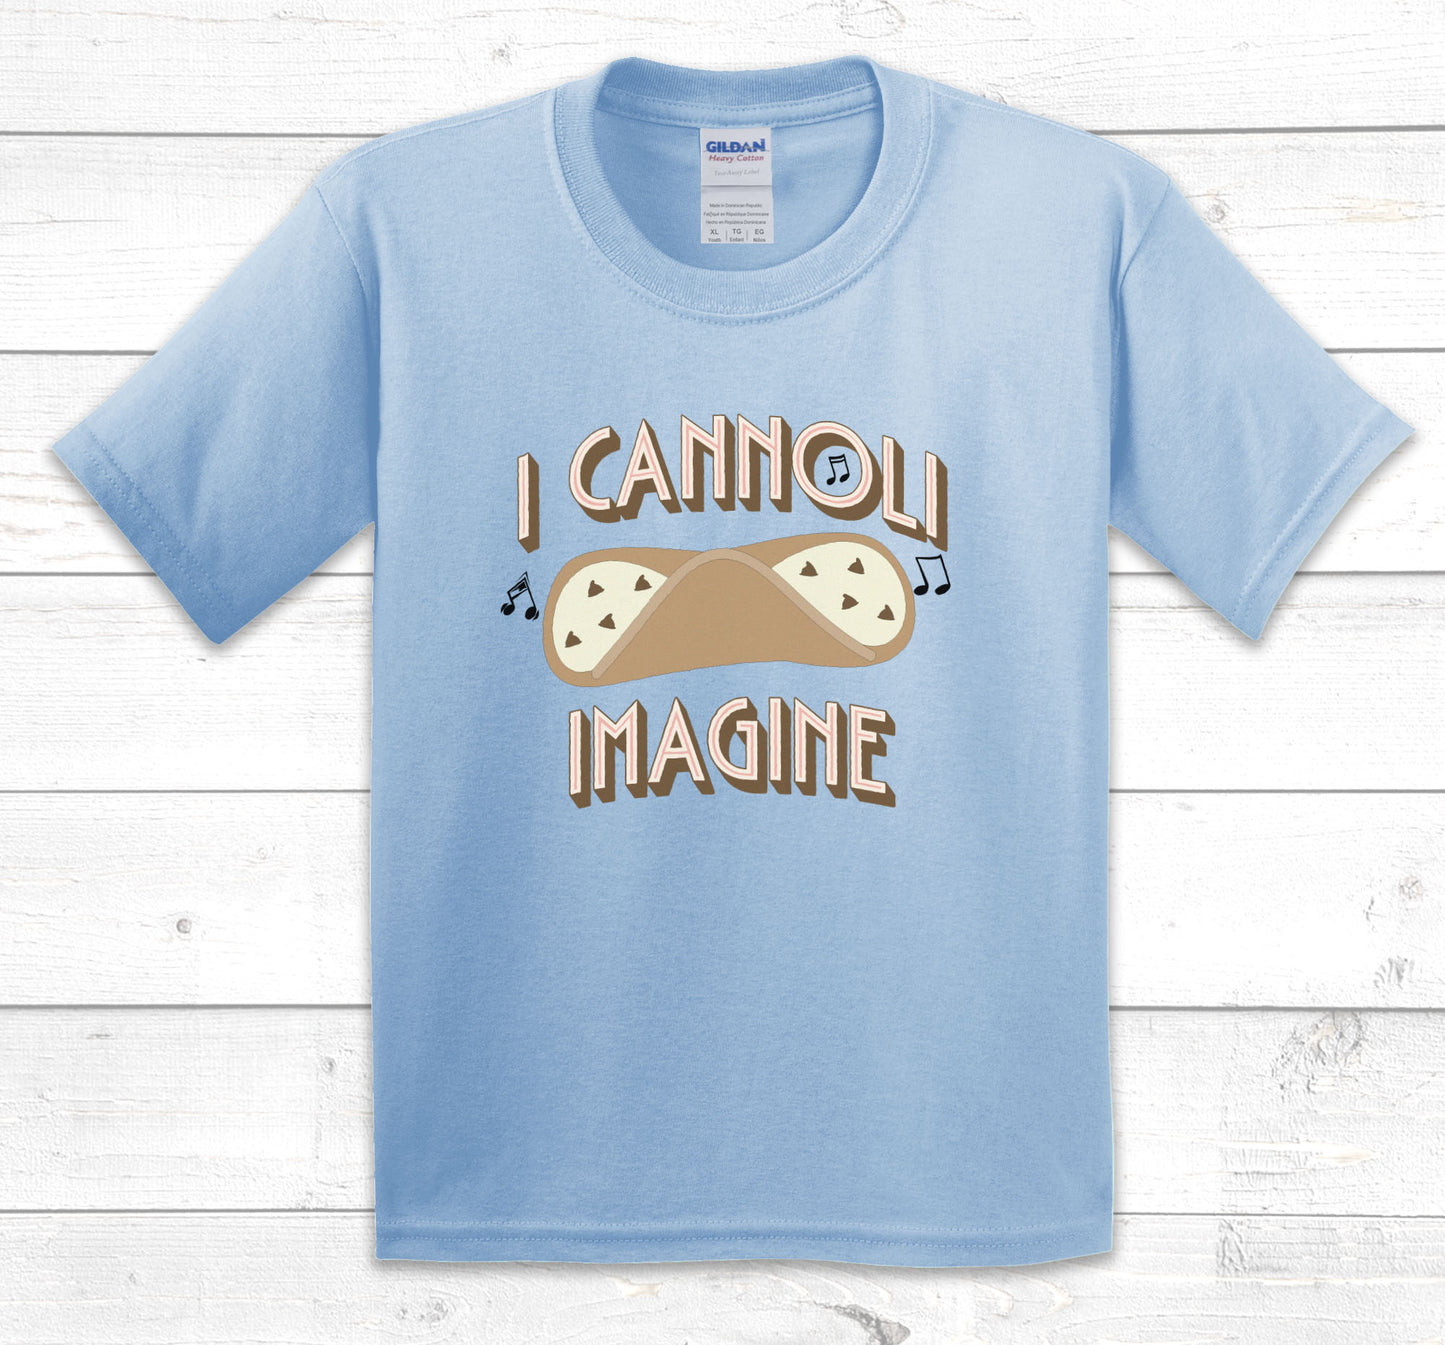 I Cannoli Imagine kids t-shirt in Light Blue